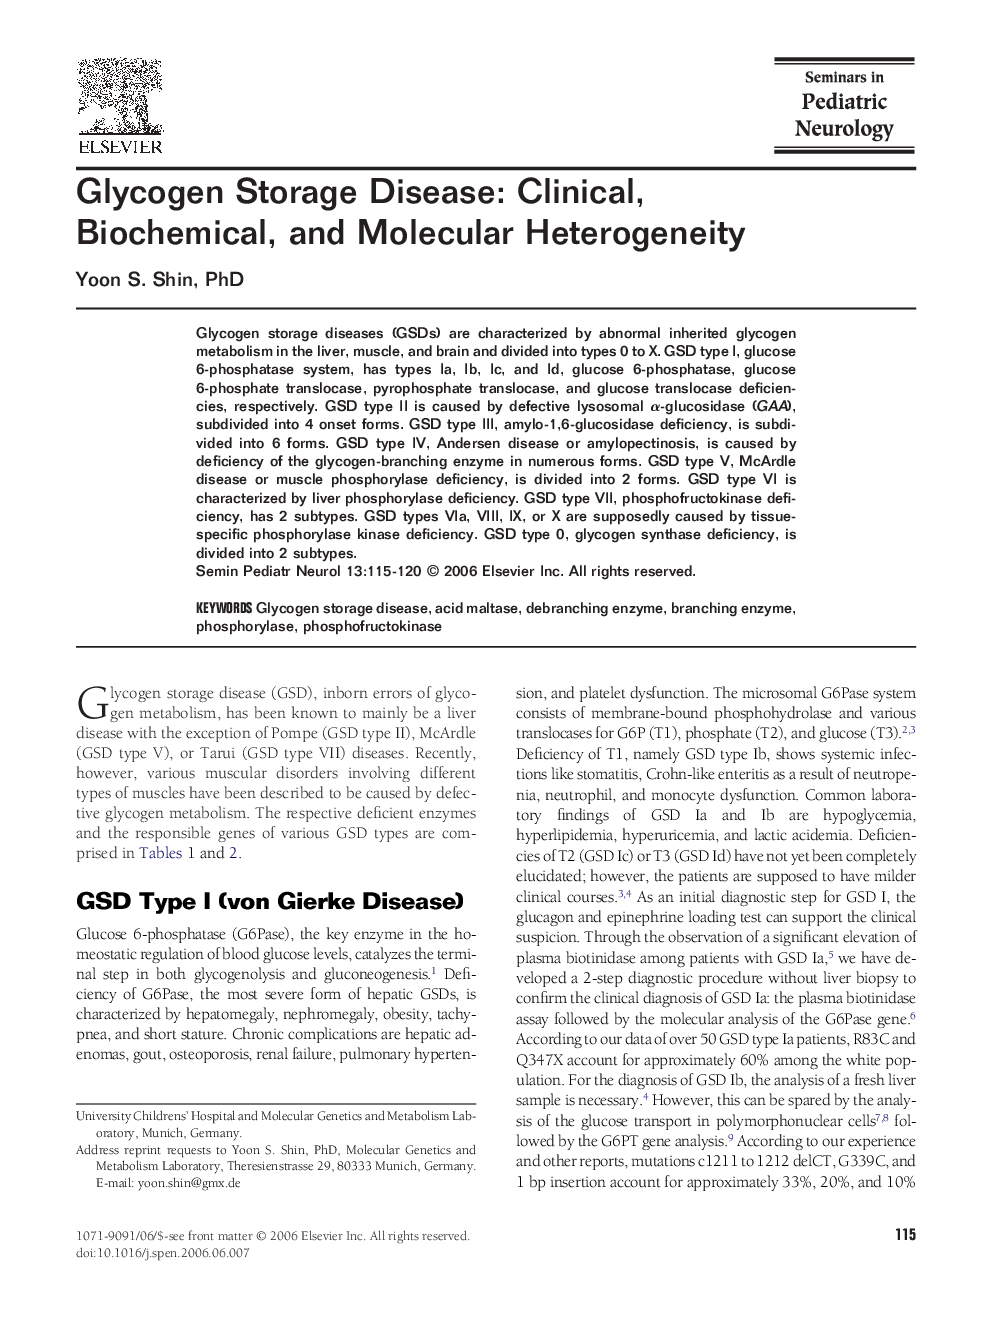 Glycogen Storage Disease: Clinical, Biochemical, and Molecular Heterogeneity